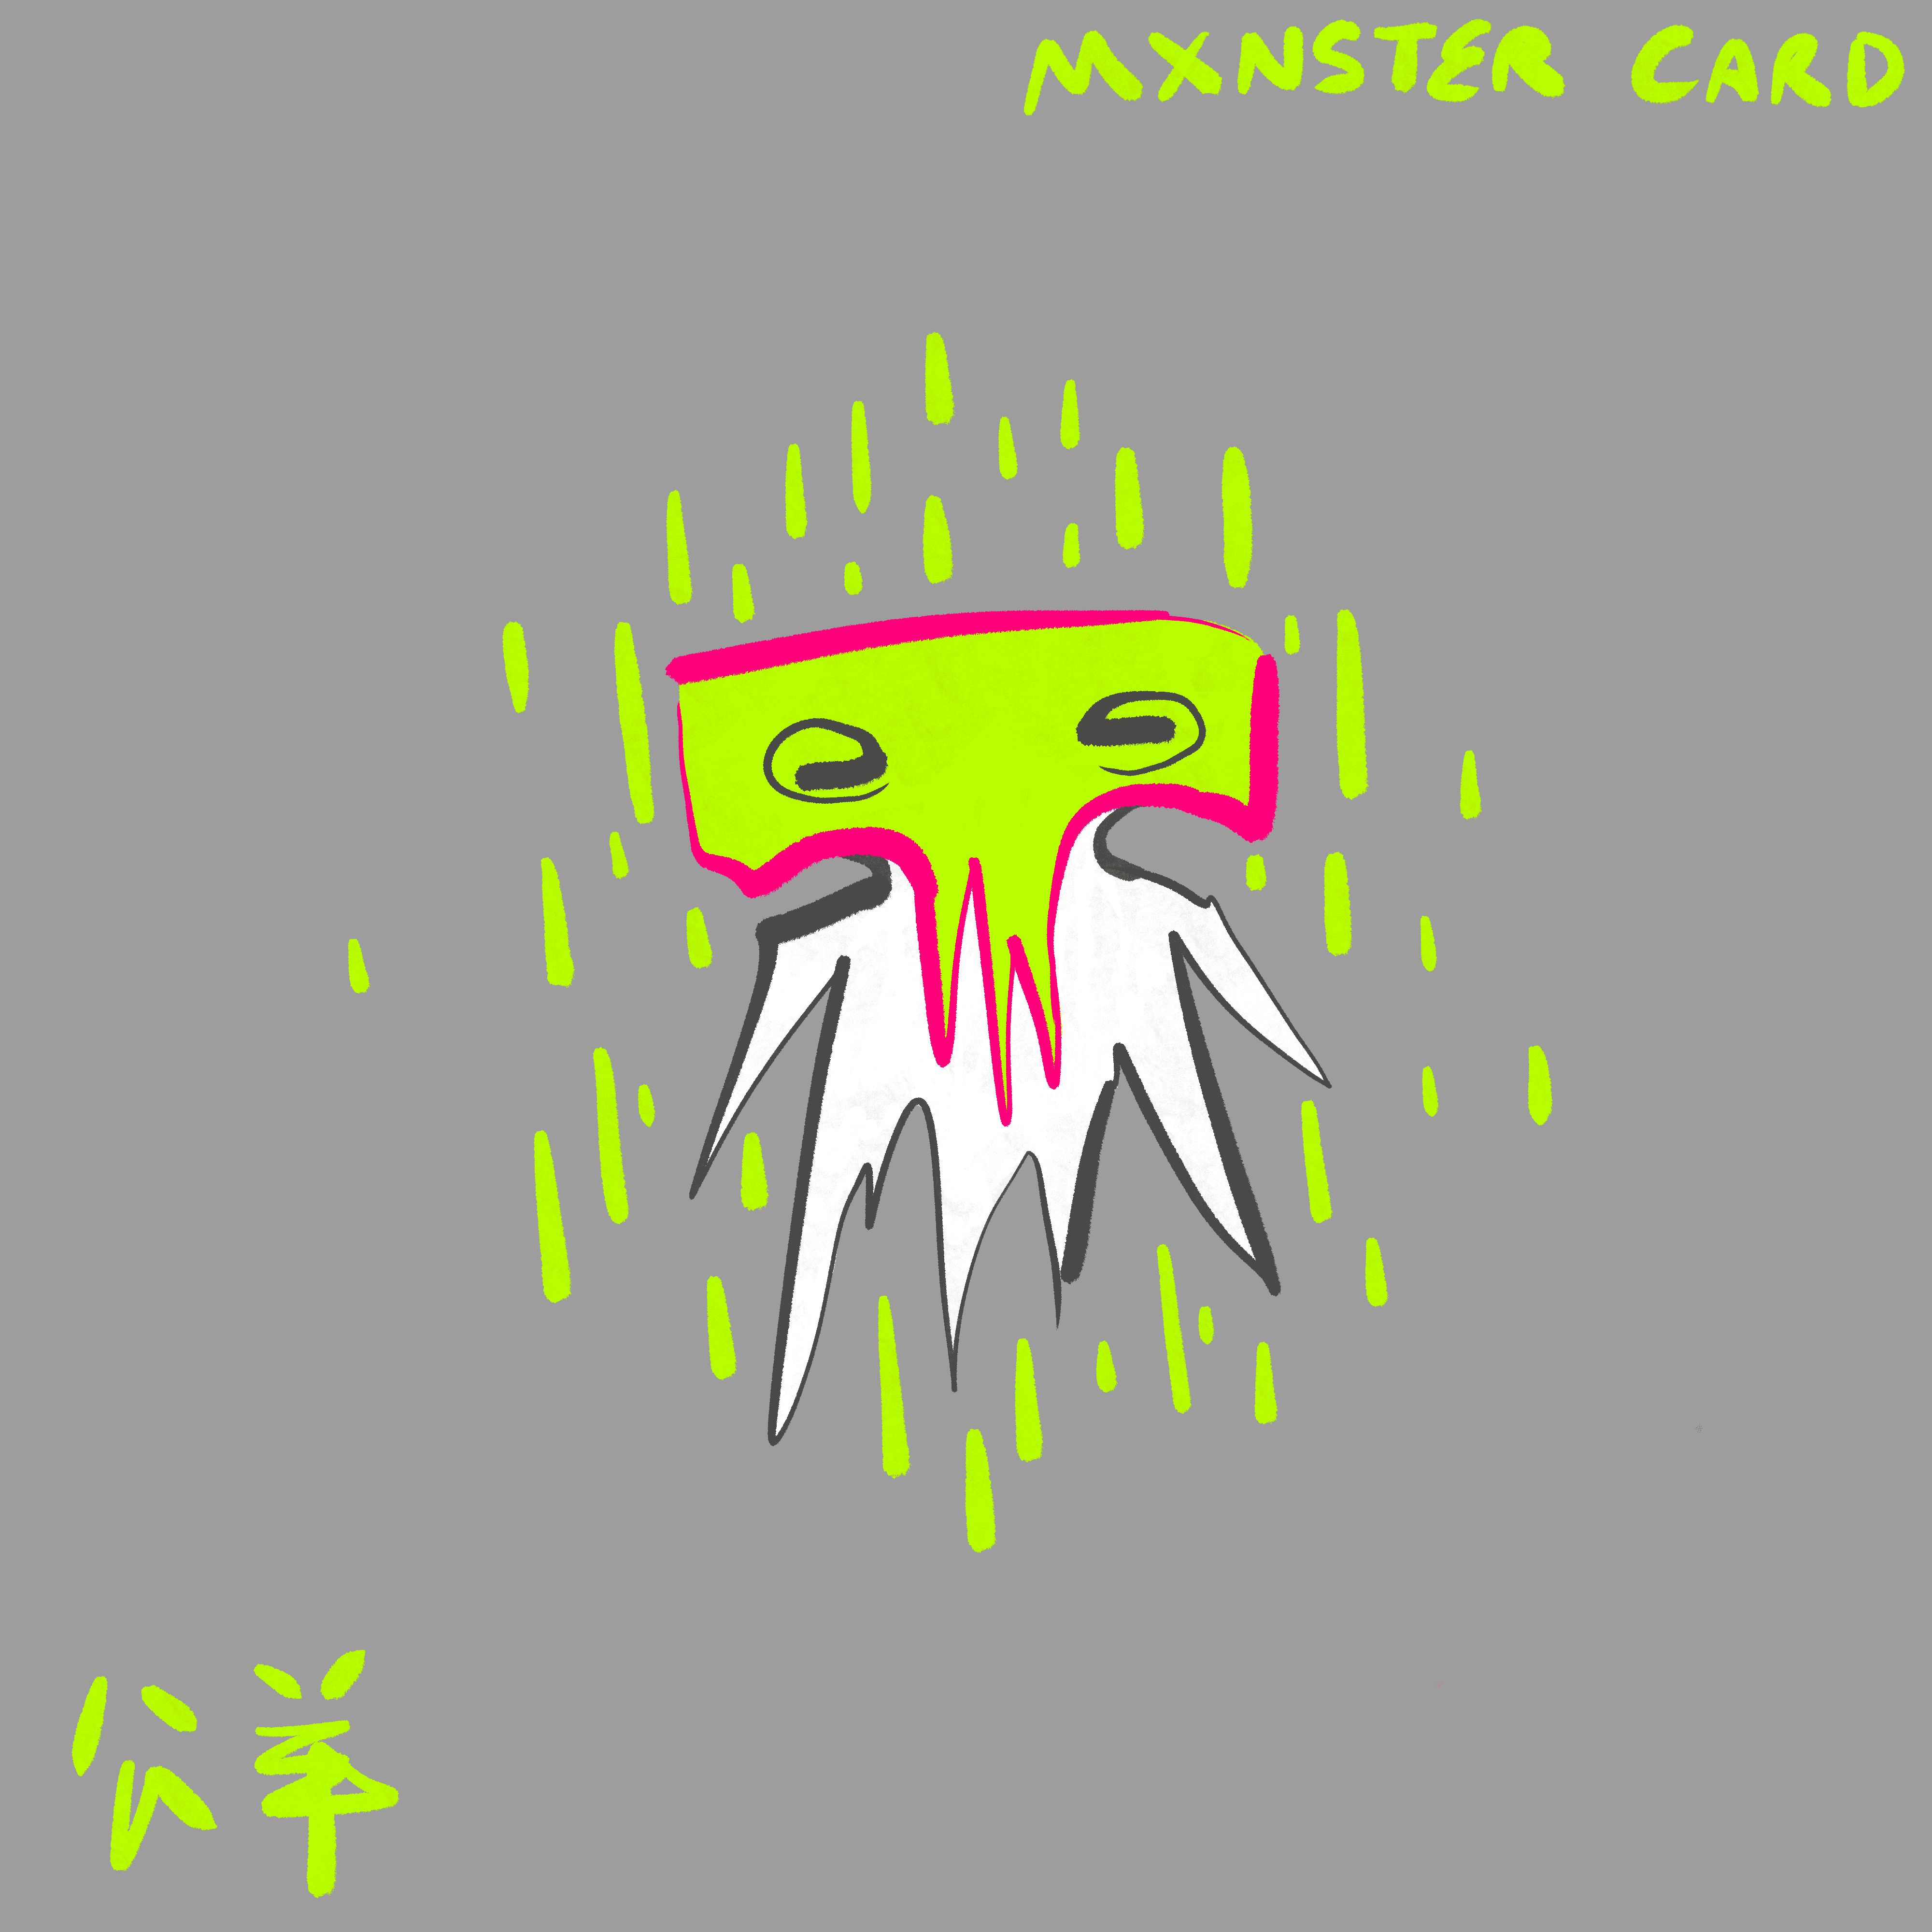 Mxnster Card 37